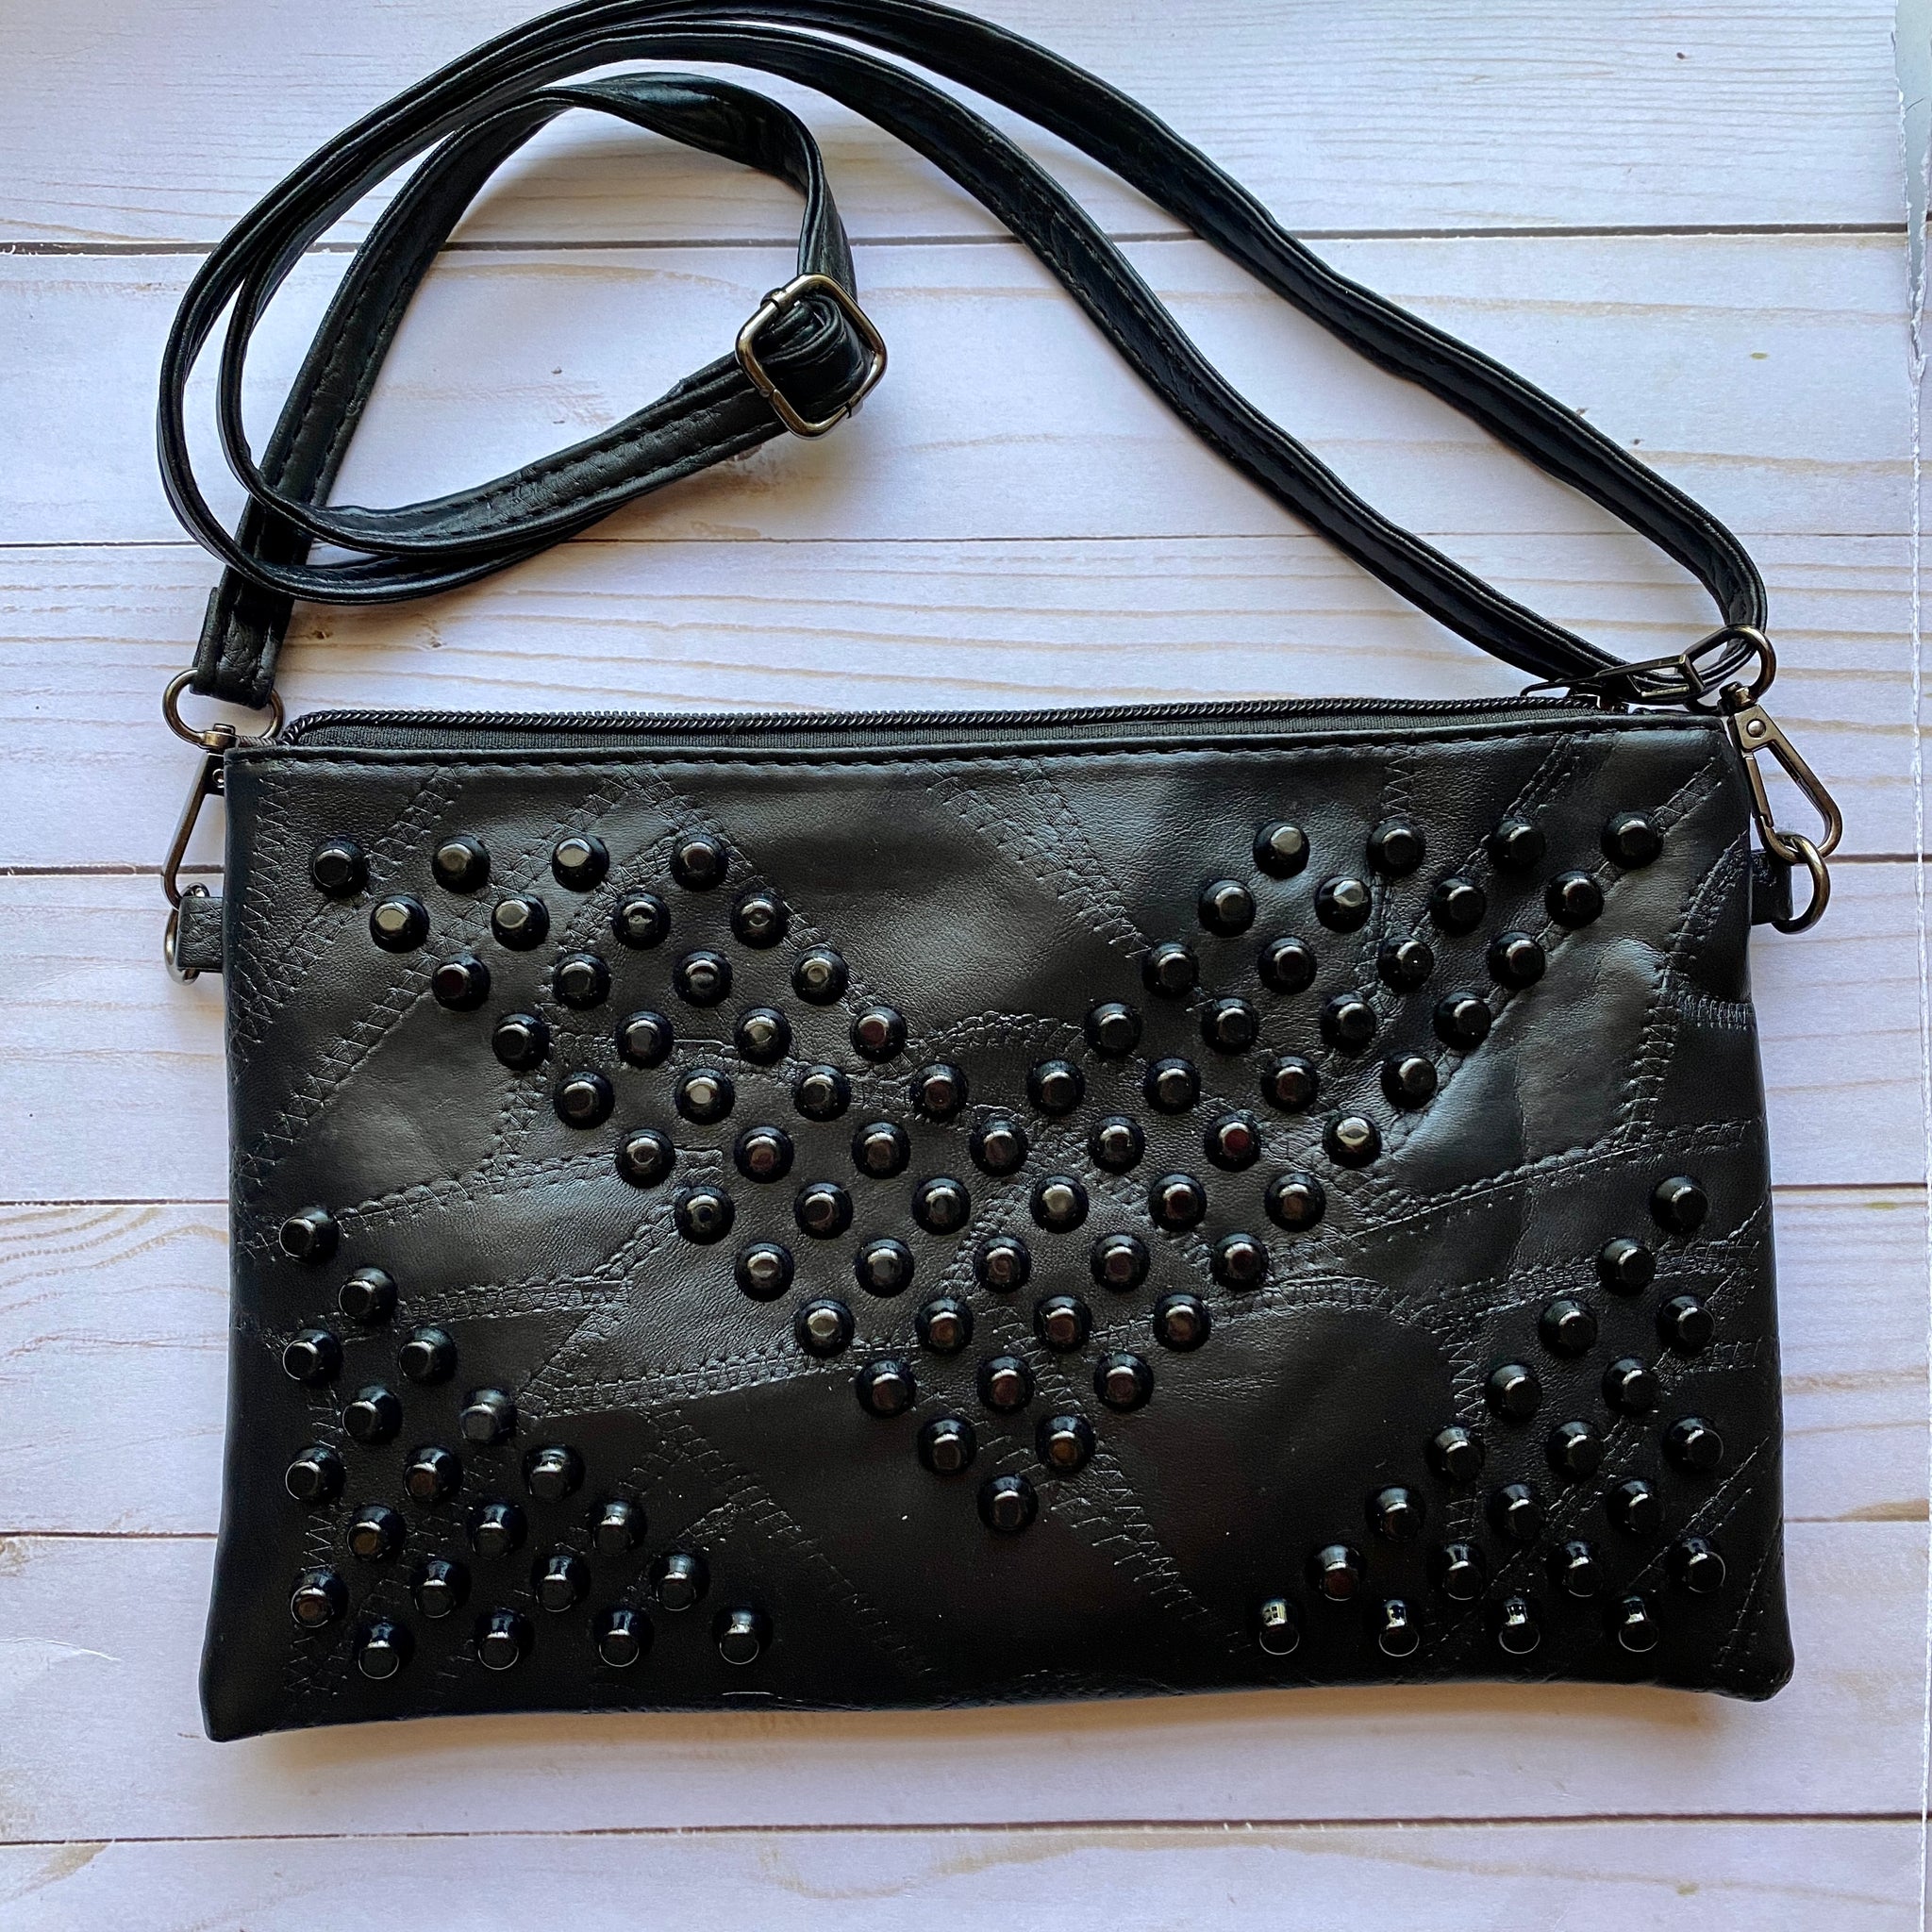 NICOLE LEE USA Studded Handbag Women's Purse Black To… - Gem